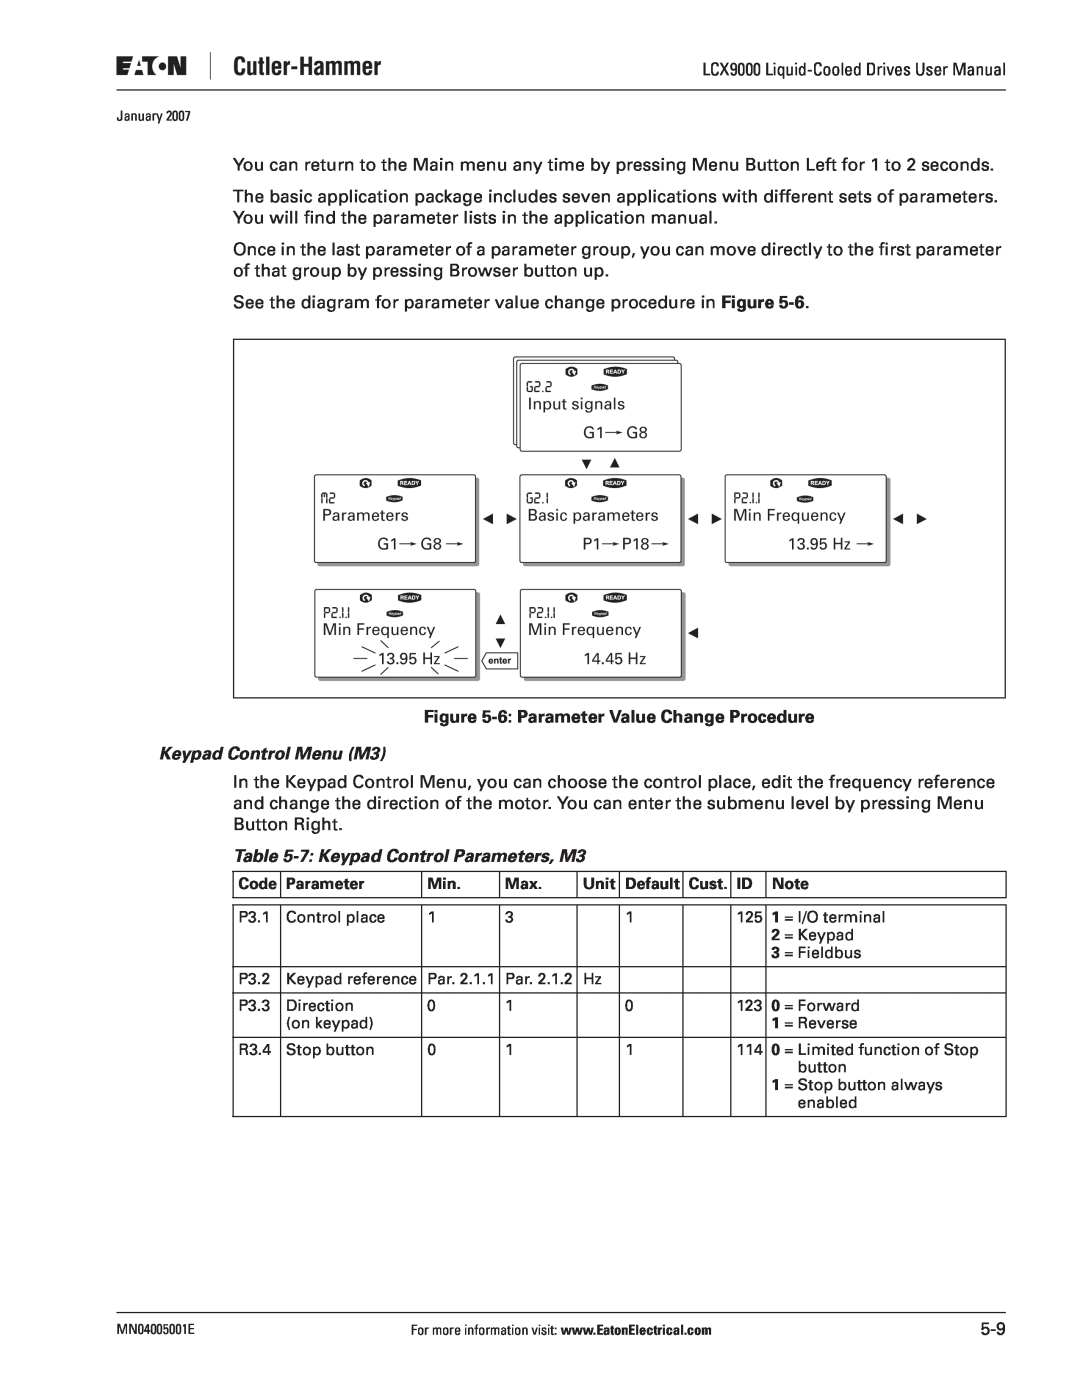 J. T. Eaton LCX9000 user manual 6 Parameter Value Change Procedure, Keypad Control Menu M3, 7 Keypad Control Parameters, M3 